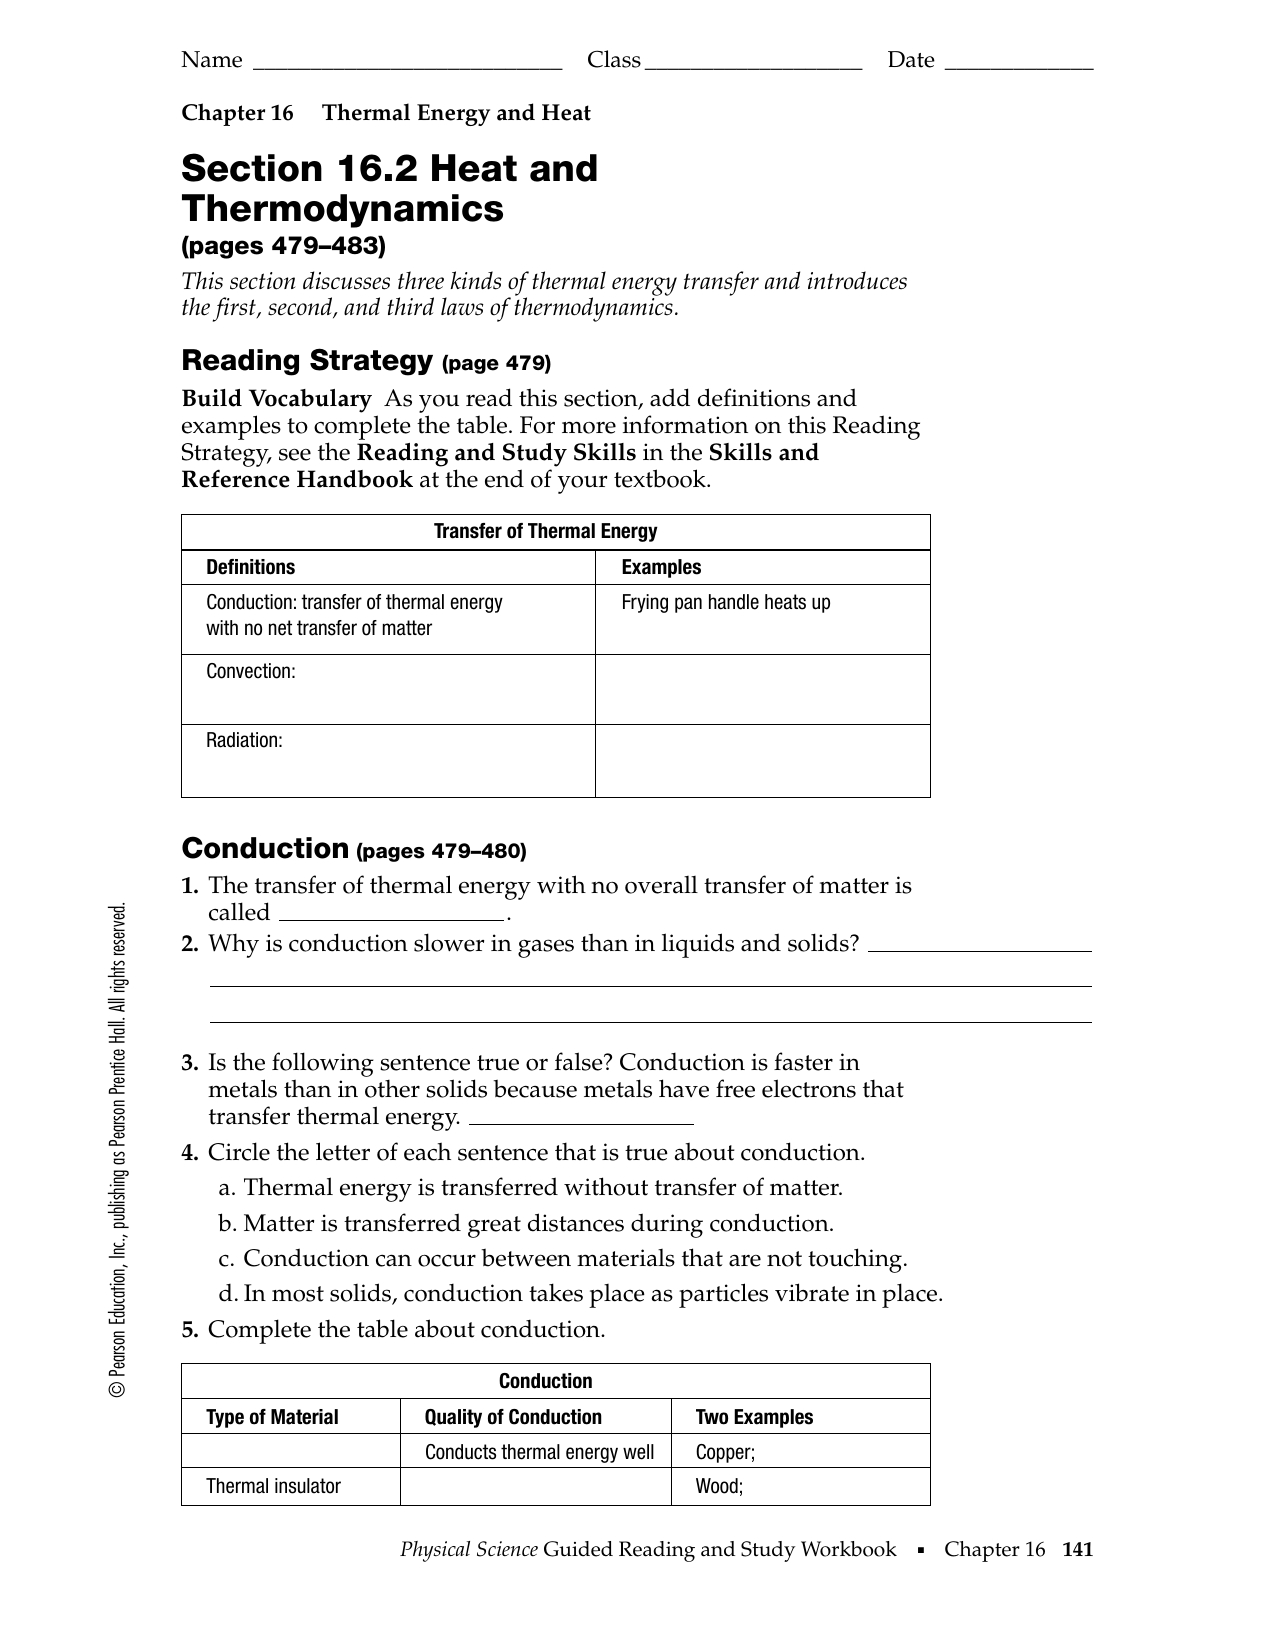 thermodynamics-worksheet-answer-key-free-download-gambr-co